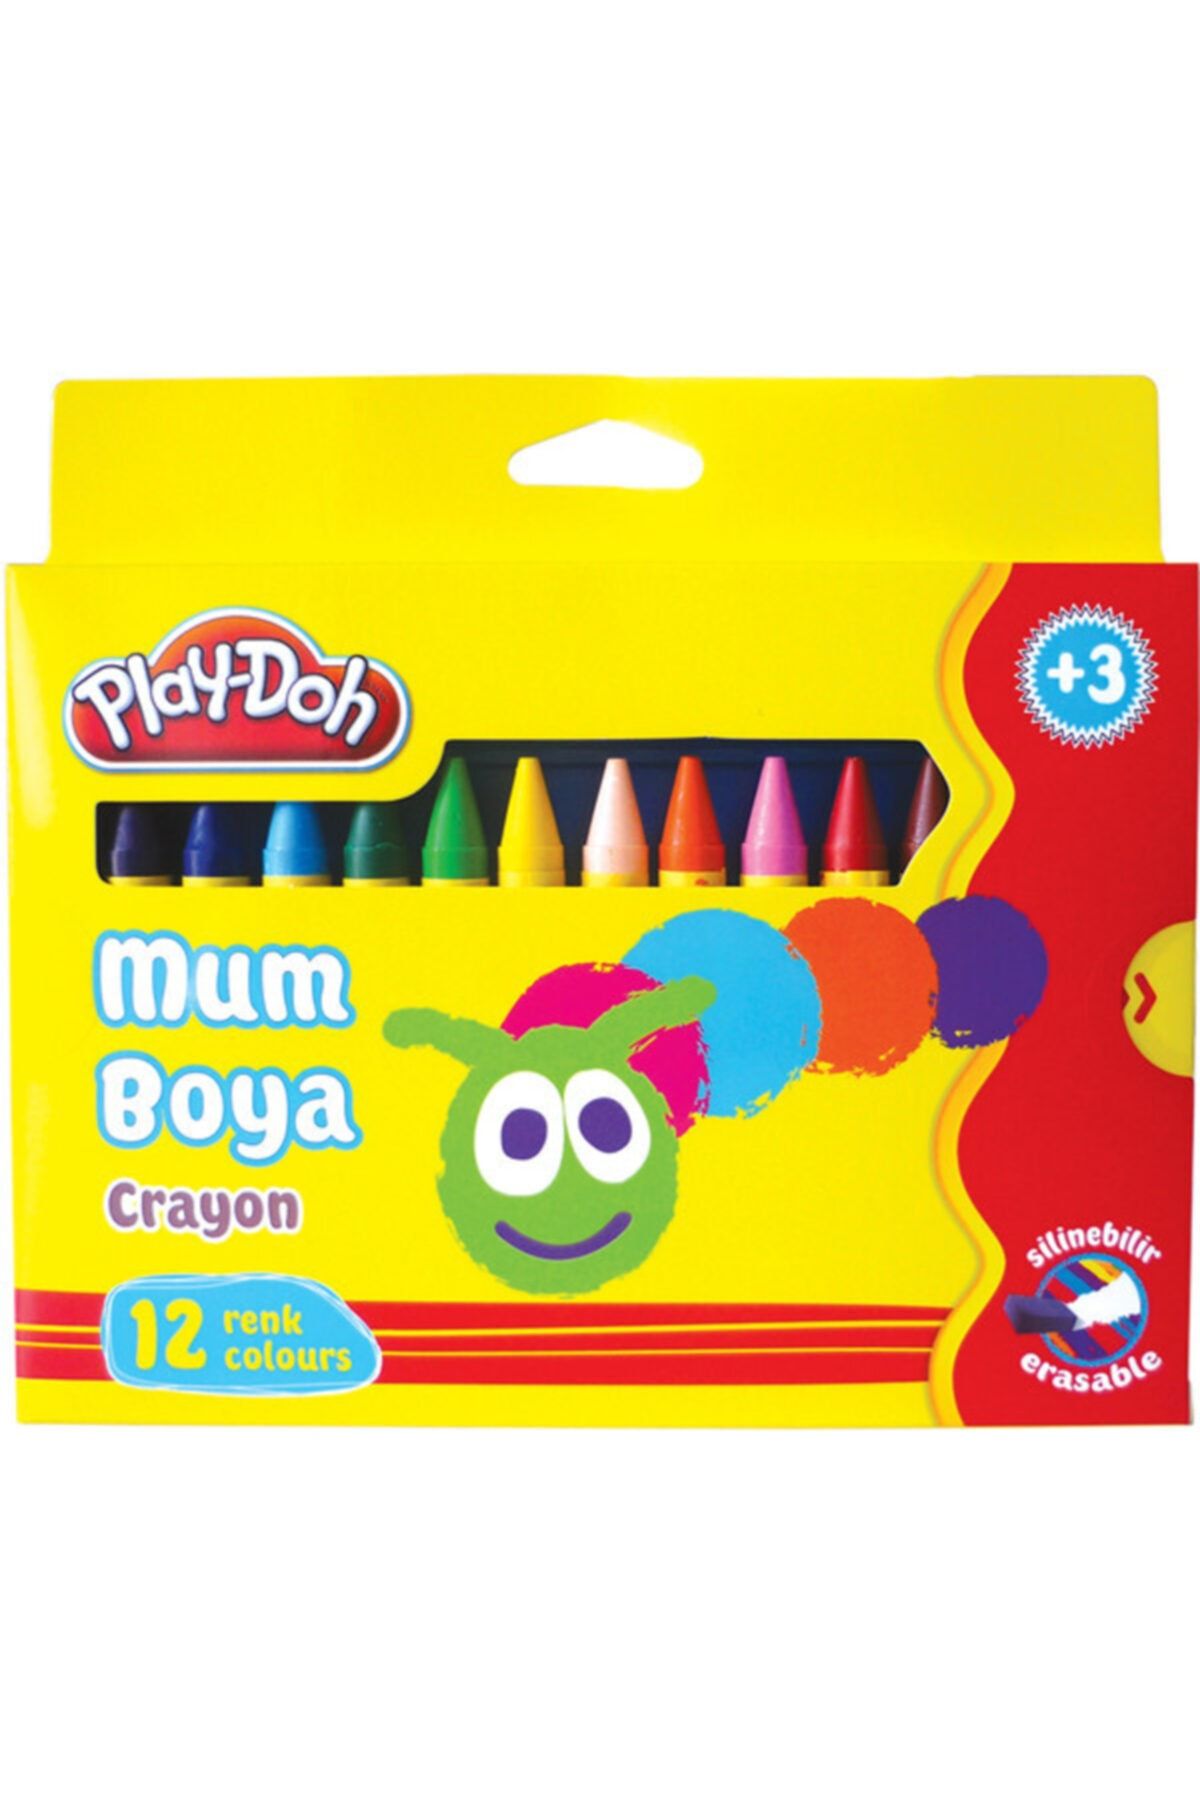 Play Doh Play-doh Crayon Mum Boya 12 Renk Karton Kutu 11 Mm Play-cr005